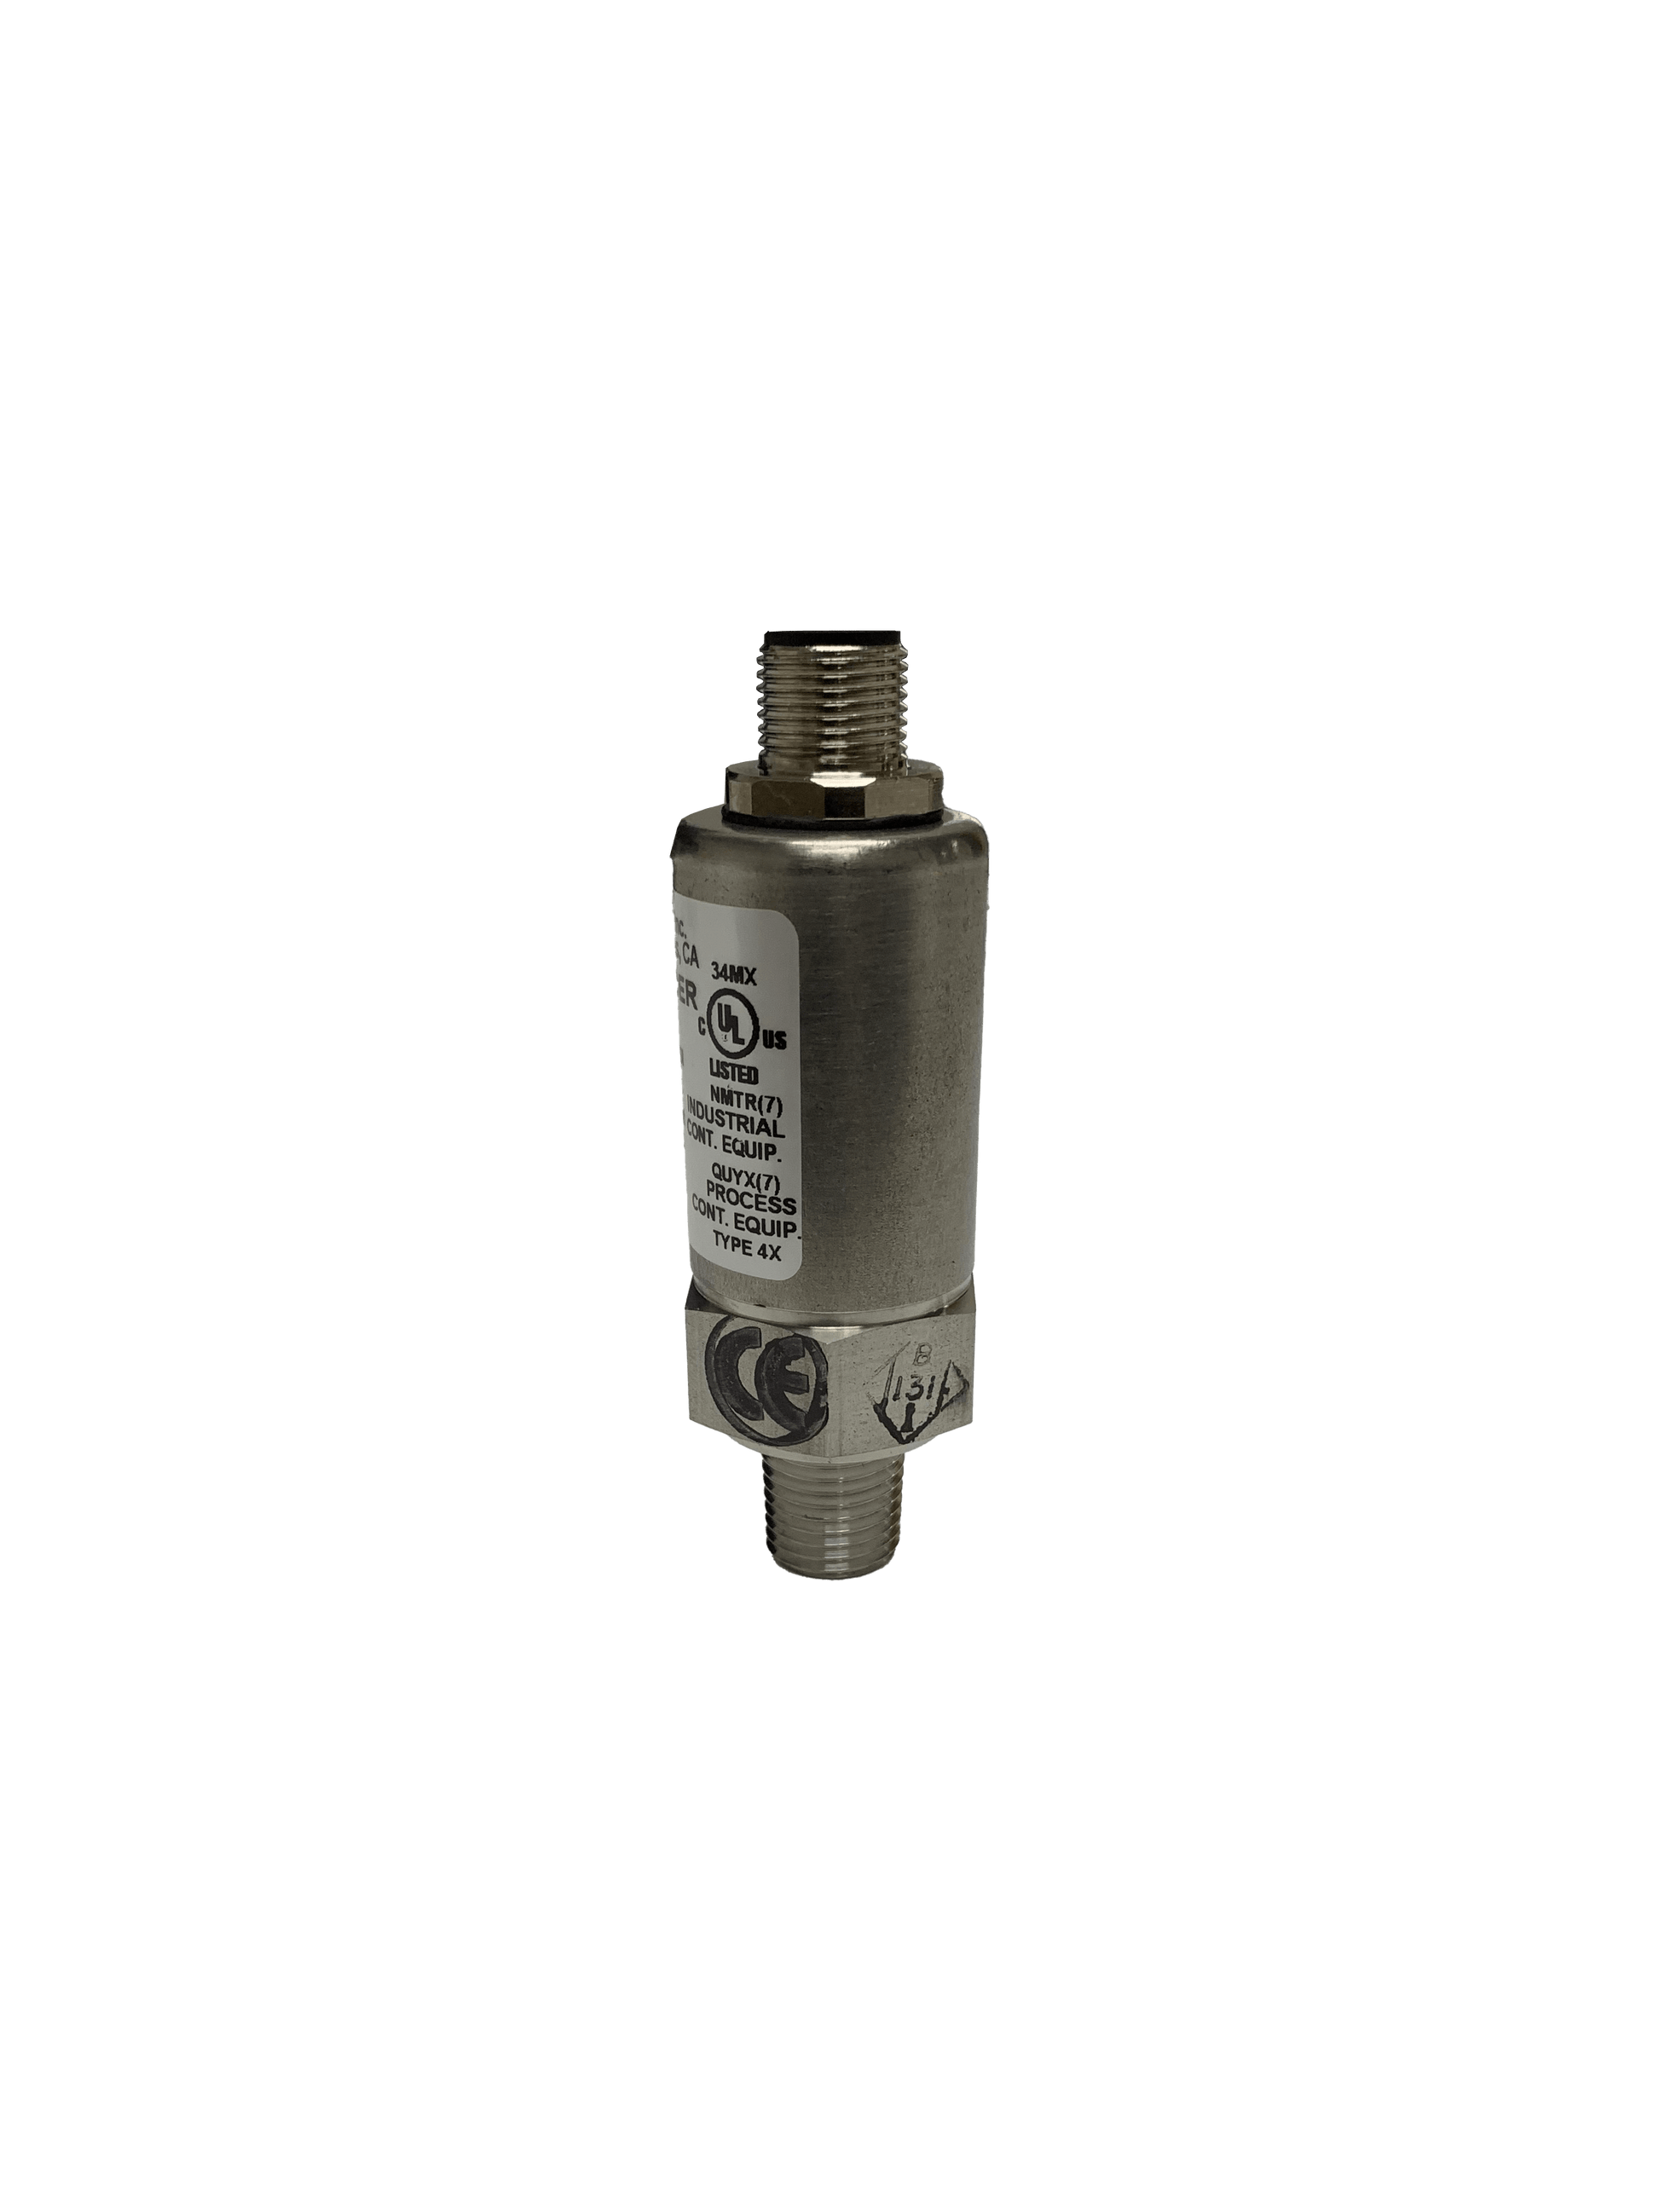 0-150 Pressure Transducer